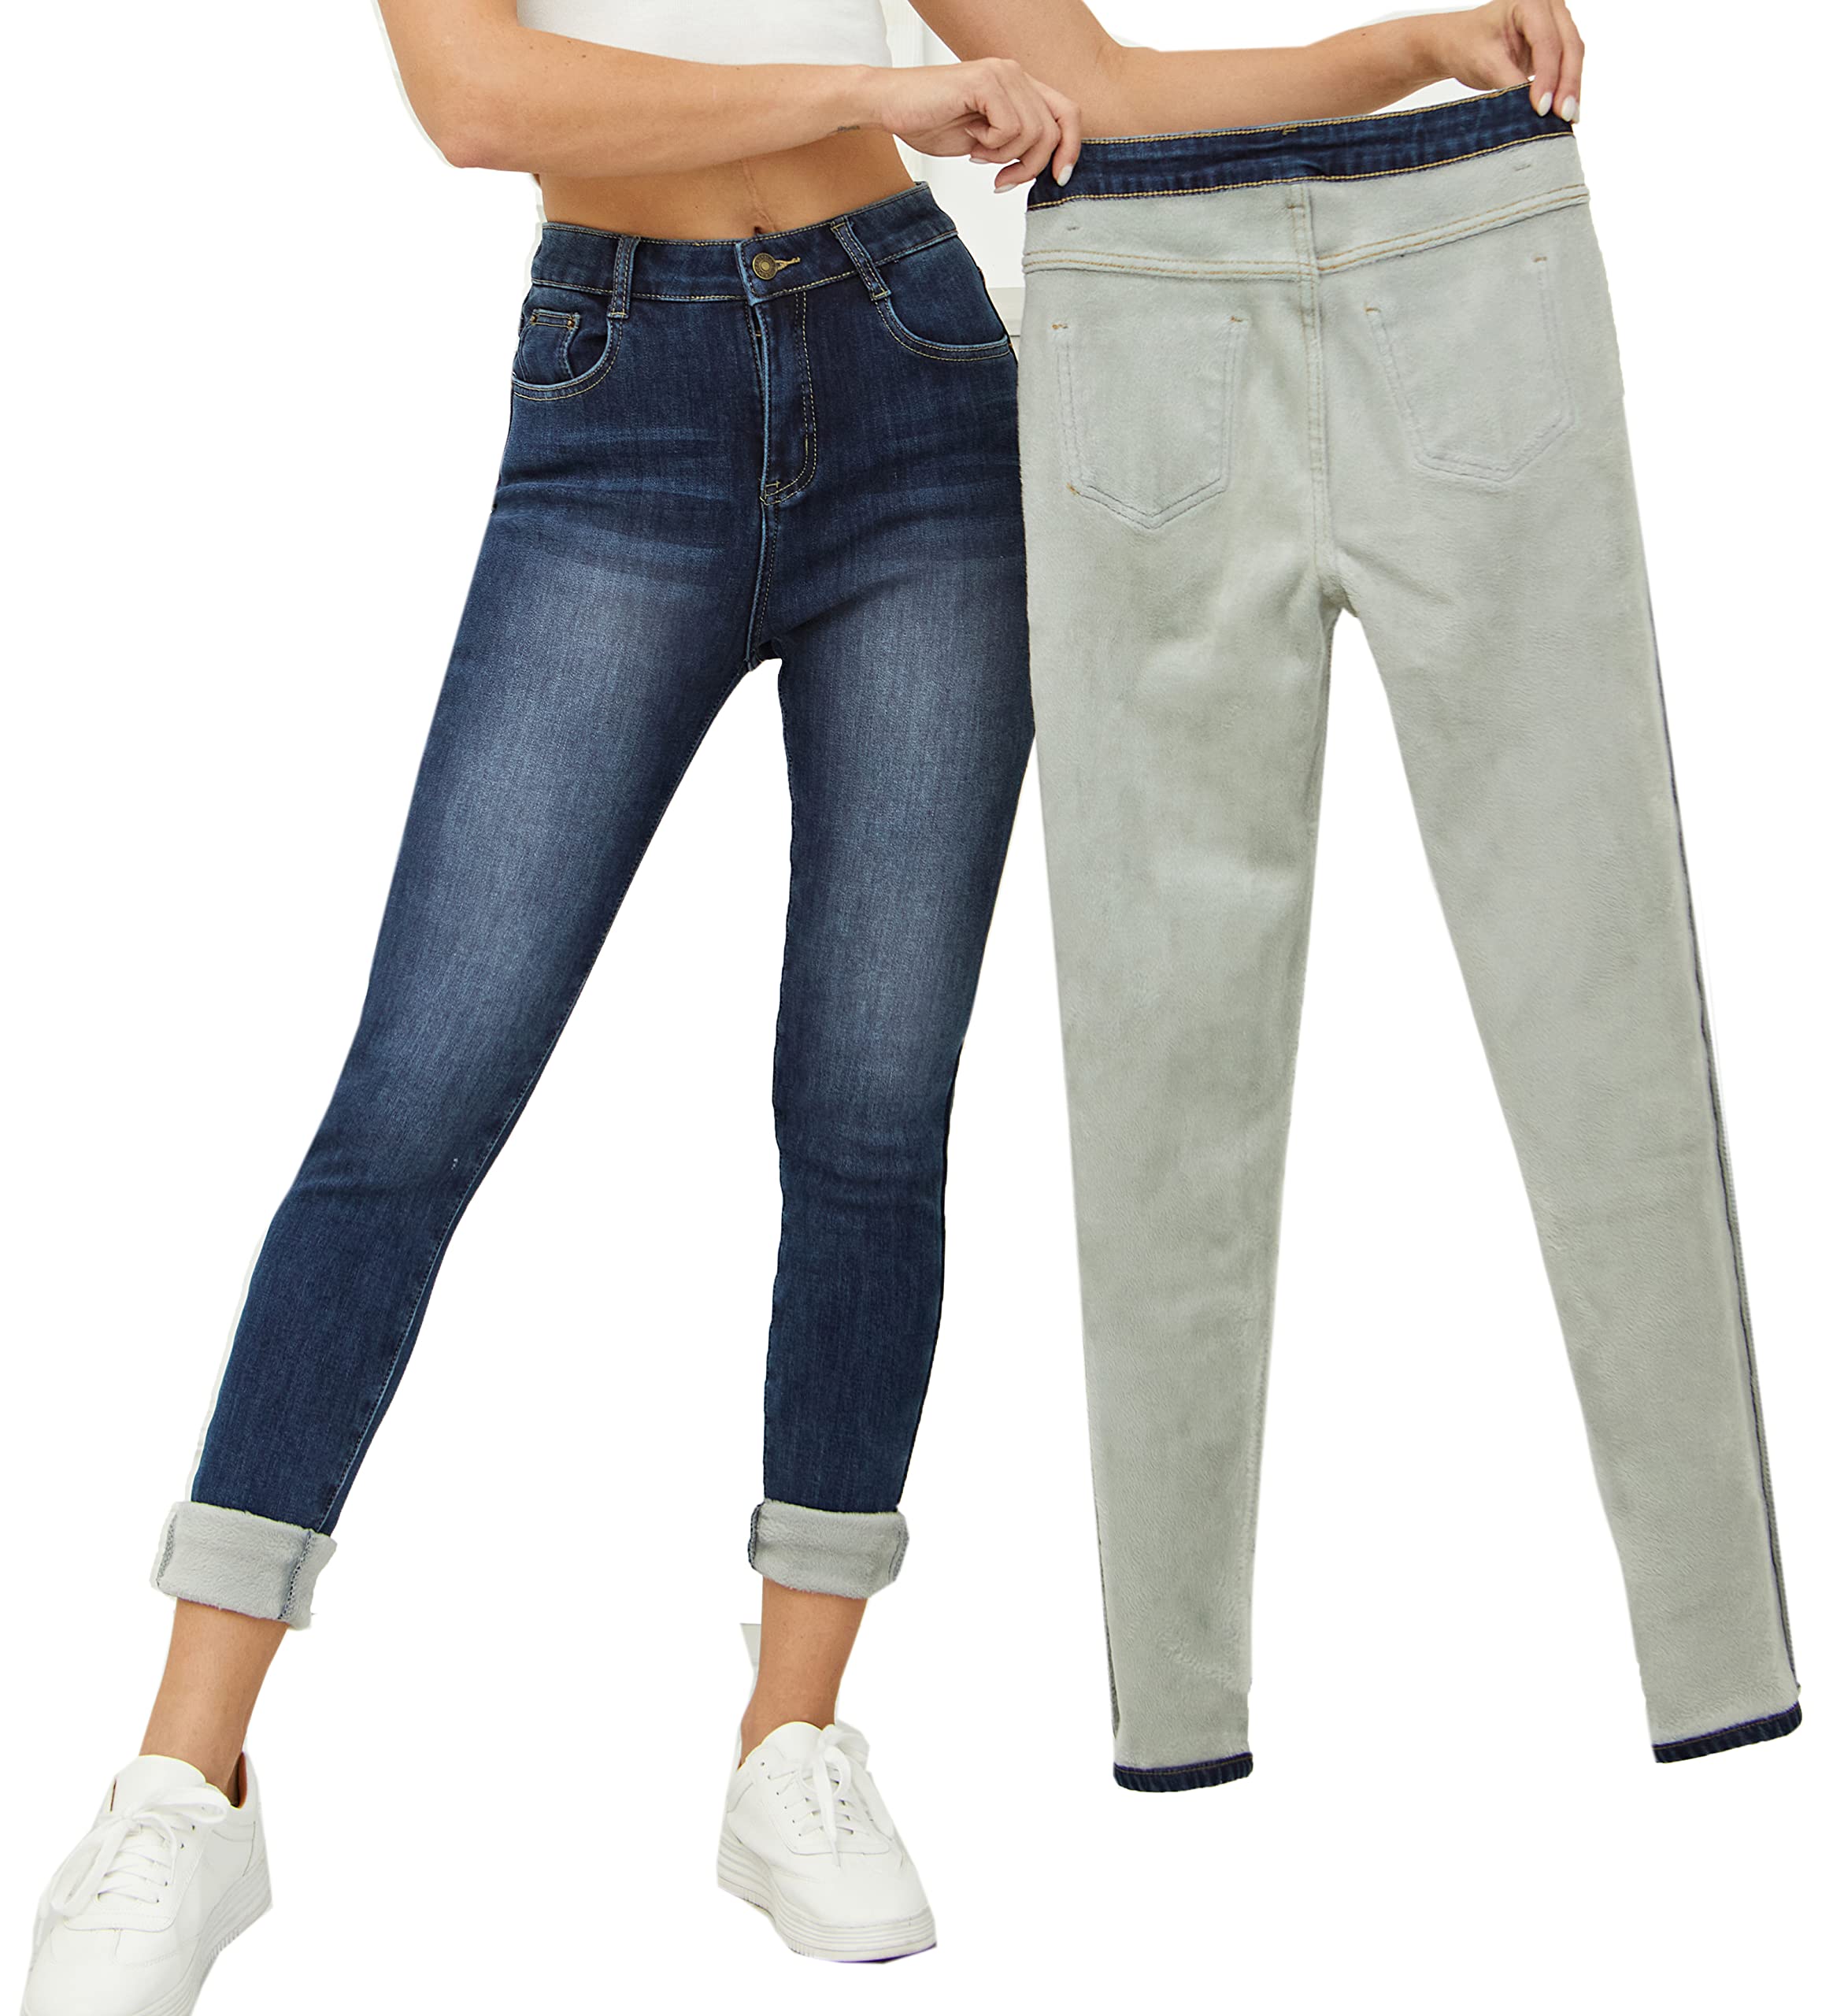 Yehopere Womens Plus Size Thermal Winter Fleece Lined Jeans Denim Pants  Leggings 5X